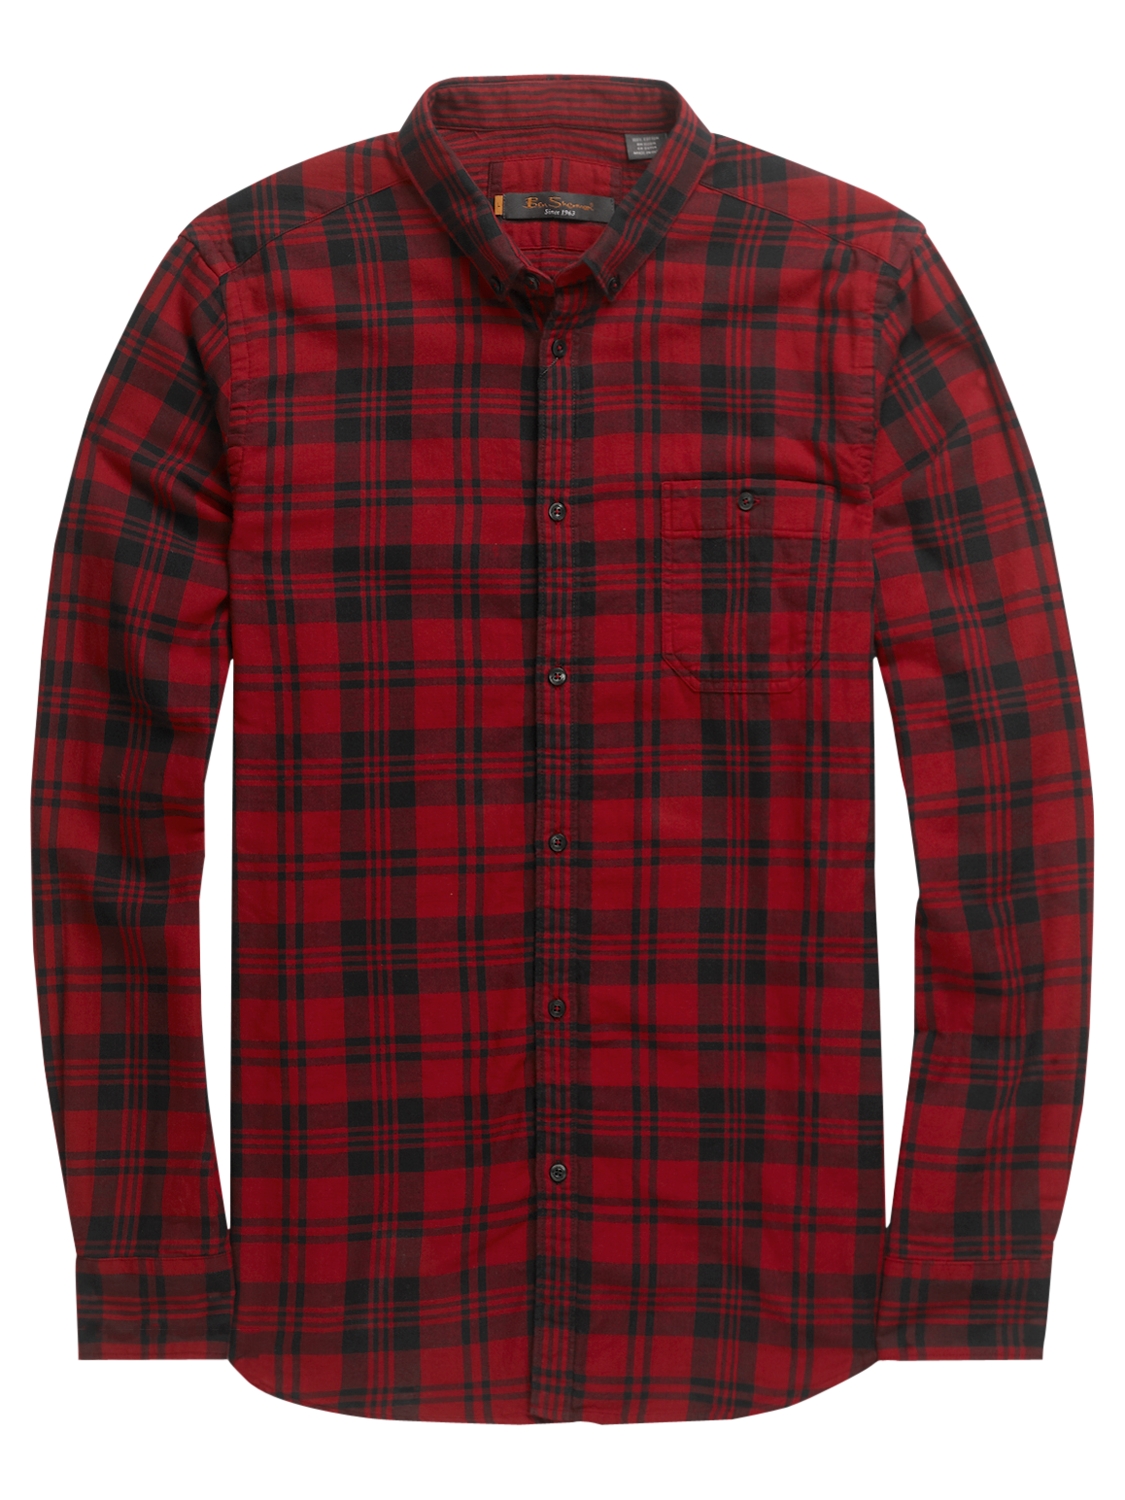 Ben Sherman Ben Sherman Tartan Flannel Shirt Red for Men - Lyst